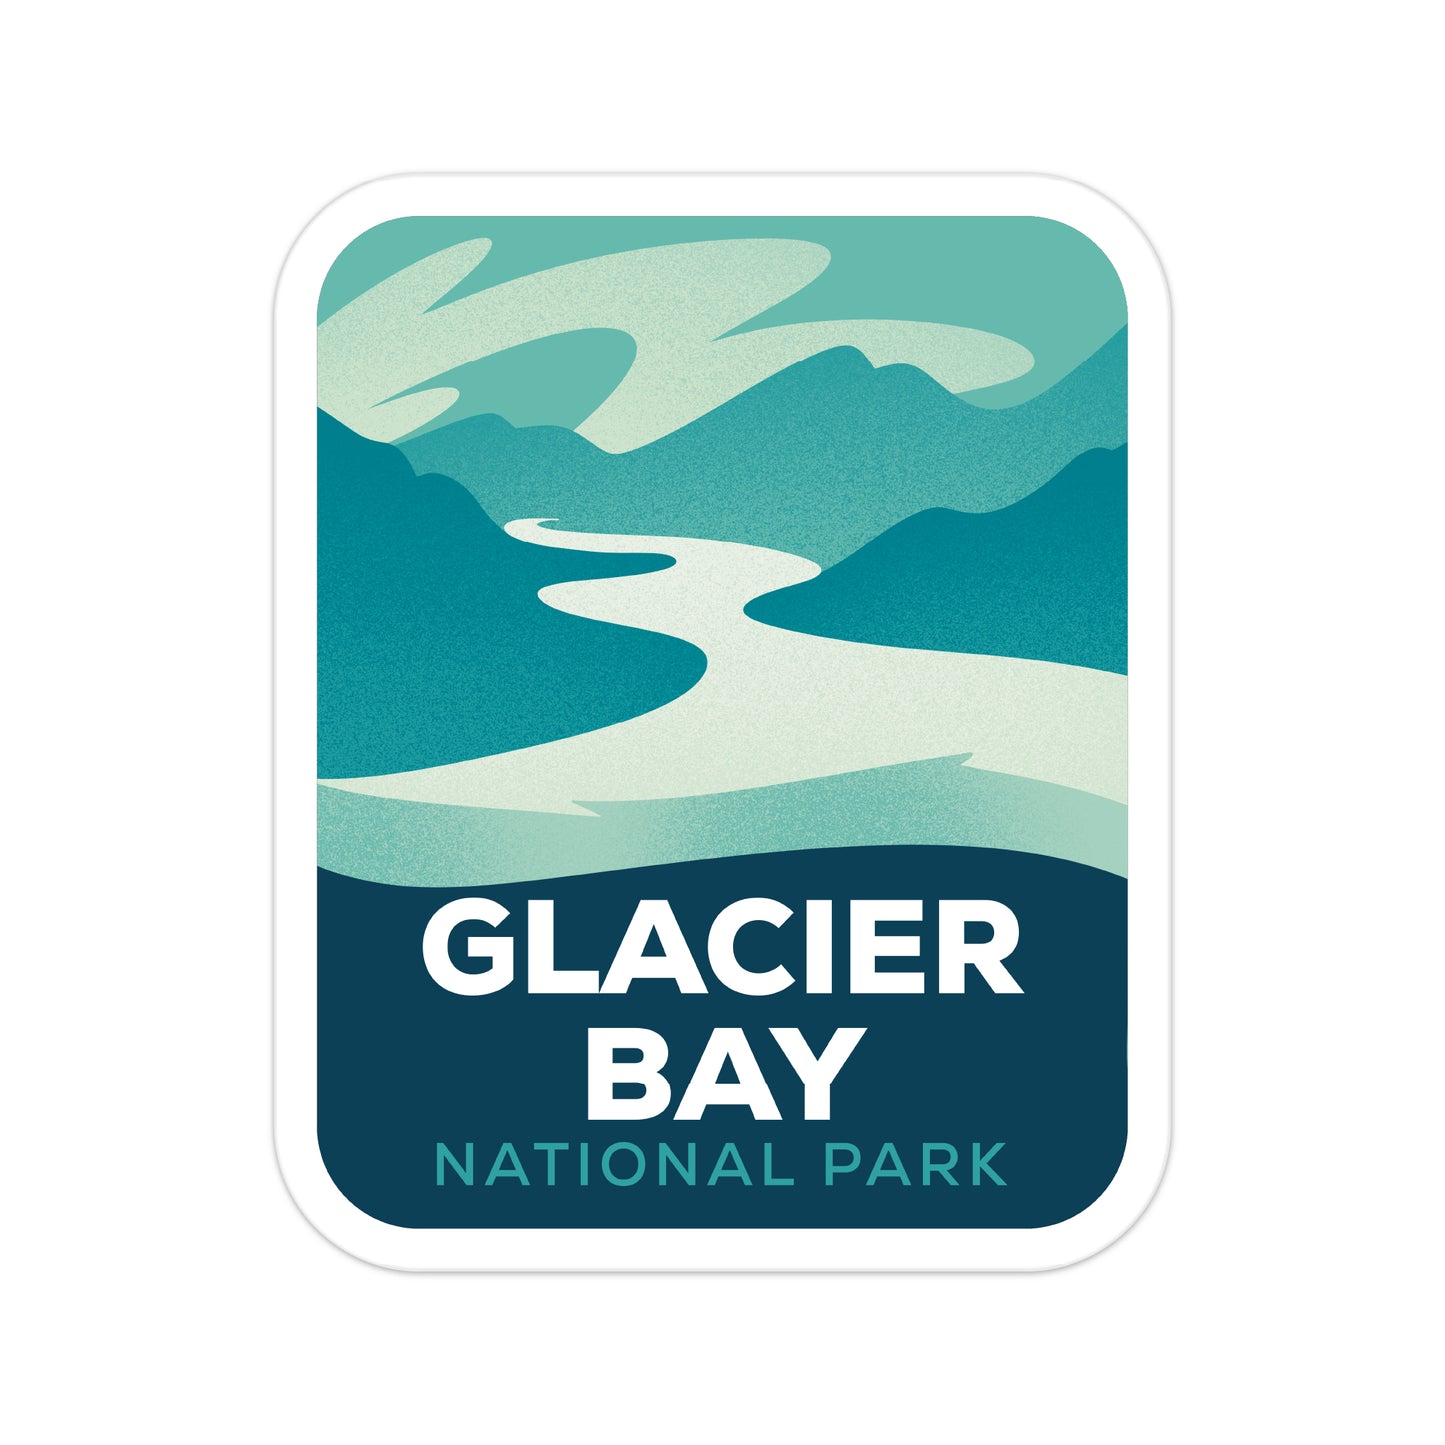 A sticker of Glacier Bay National Park